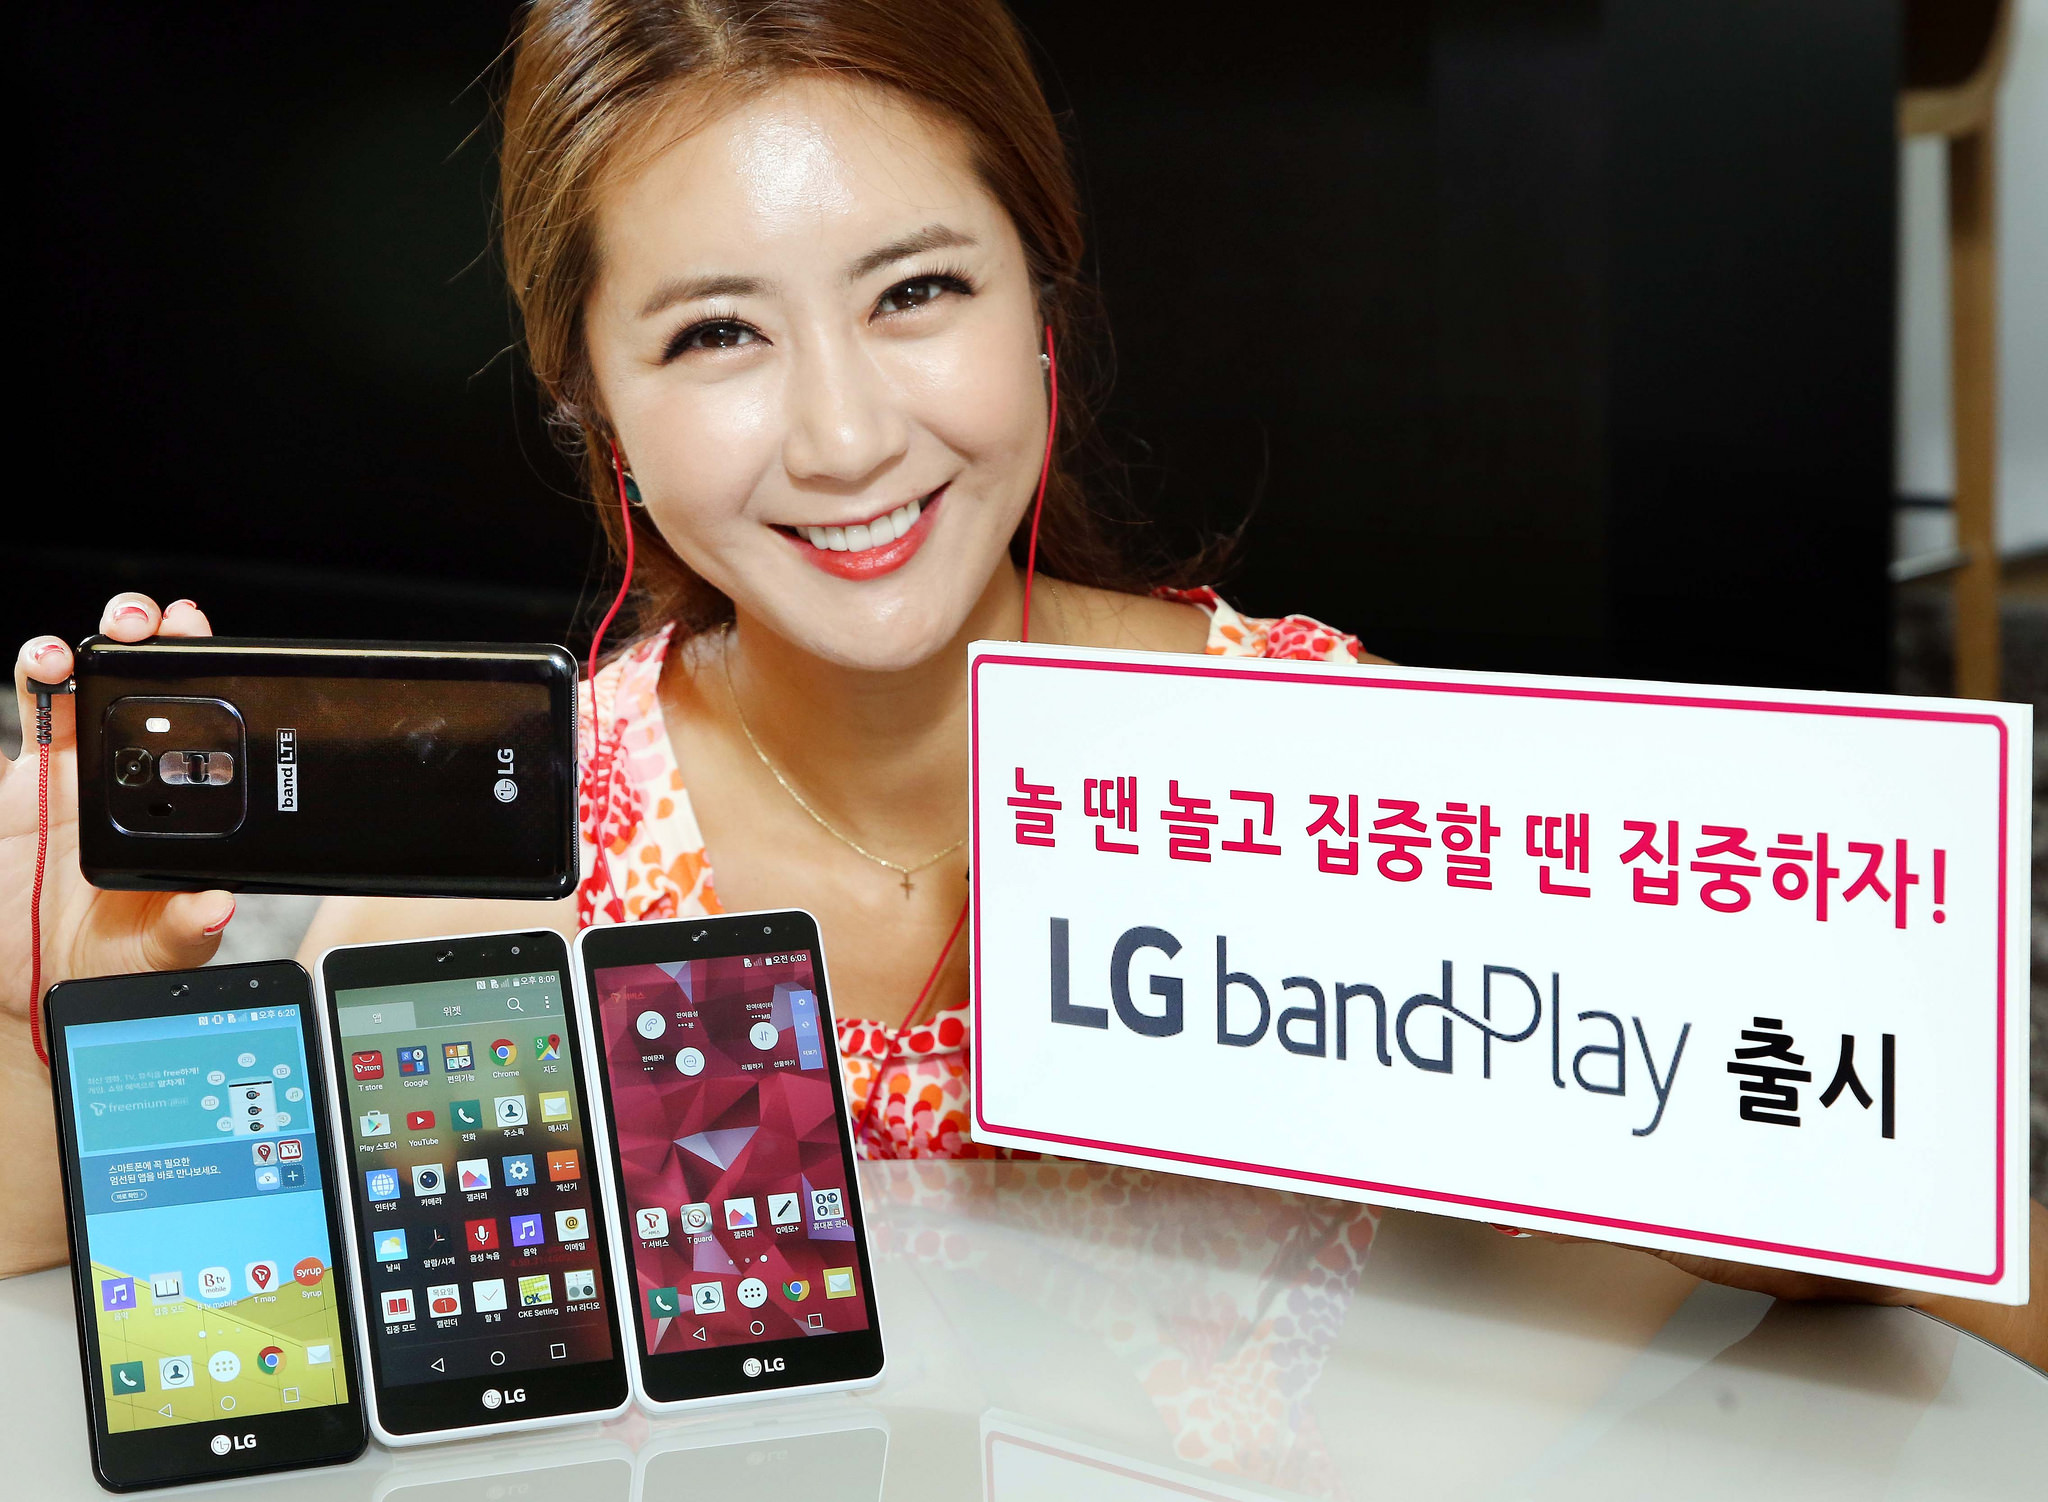 LG Band Play, o novo smartphone da LG